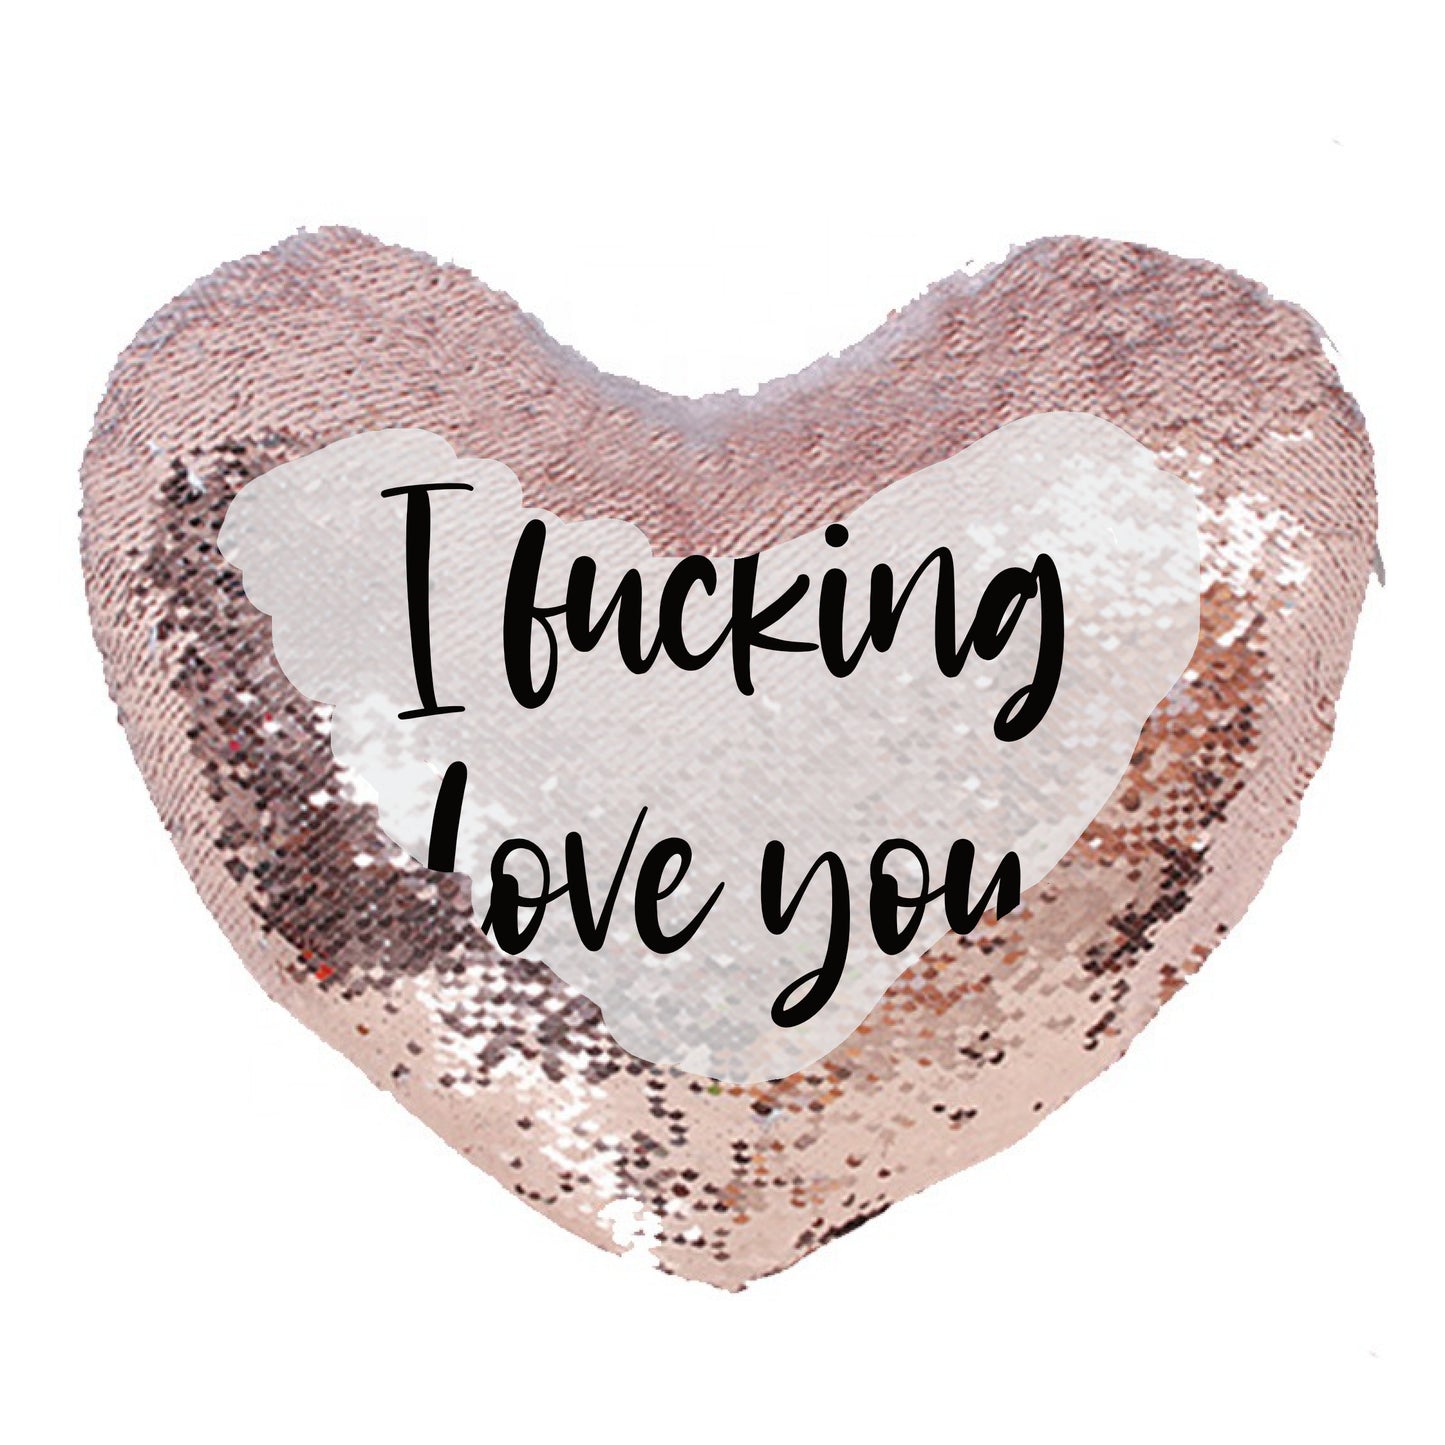 Sequin Heart Cushion - I Fucking Love You (Rose Gold)